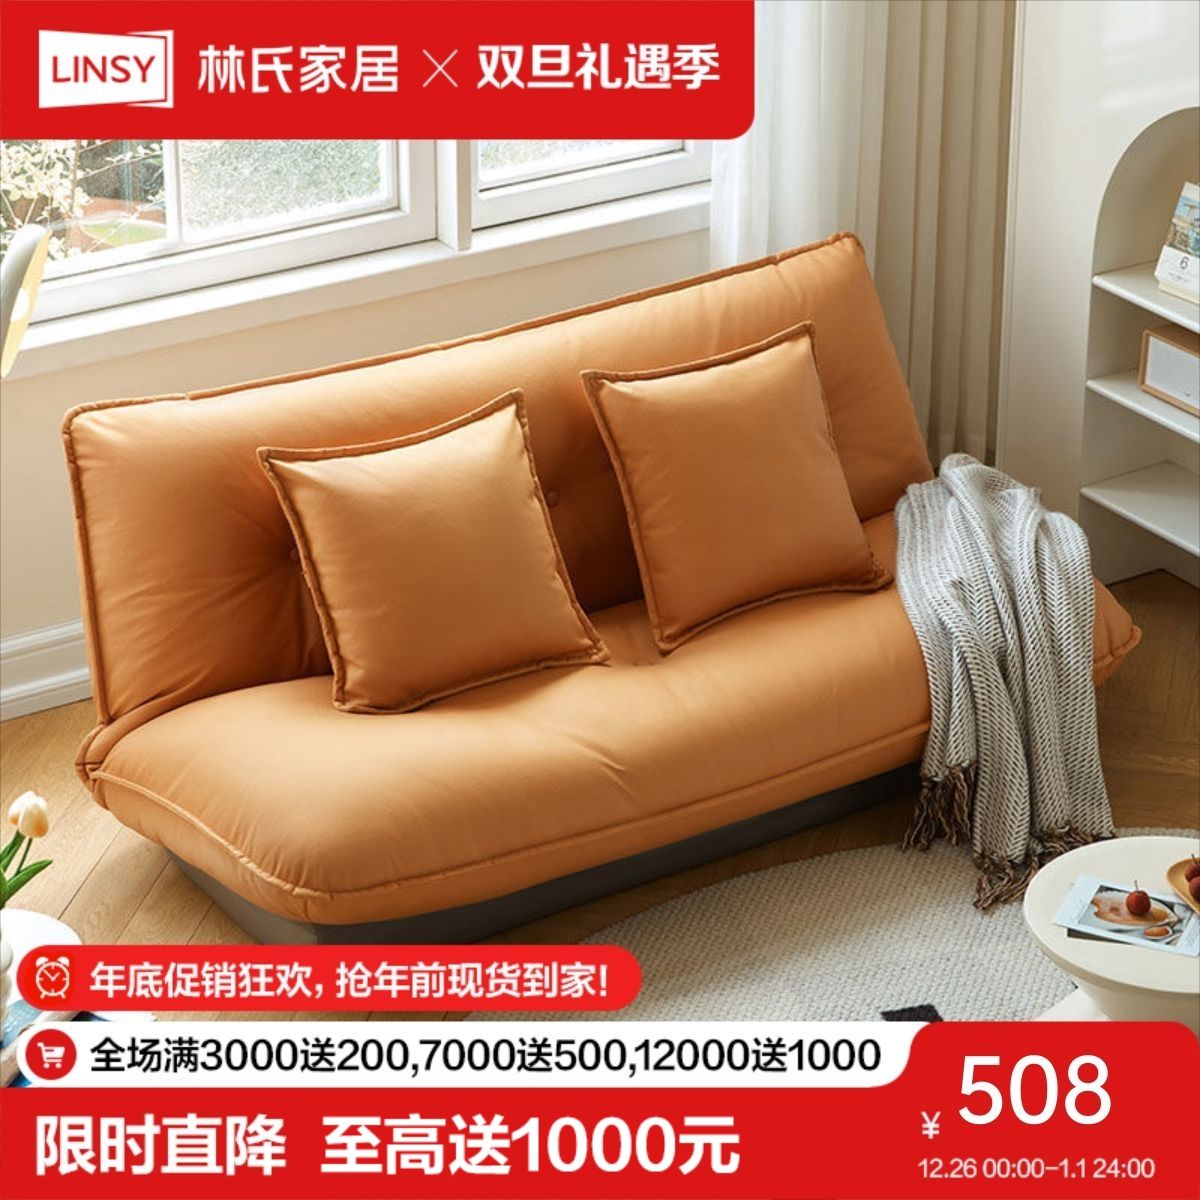 LINSY 林氏家居 客厅折叠两用懒人沙发可躺可睡宿舍卧室TDY119卧室沙发 488元